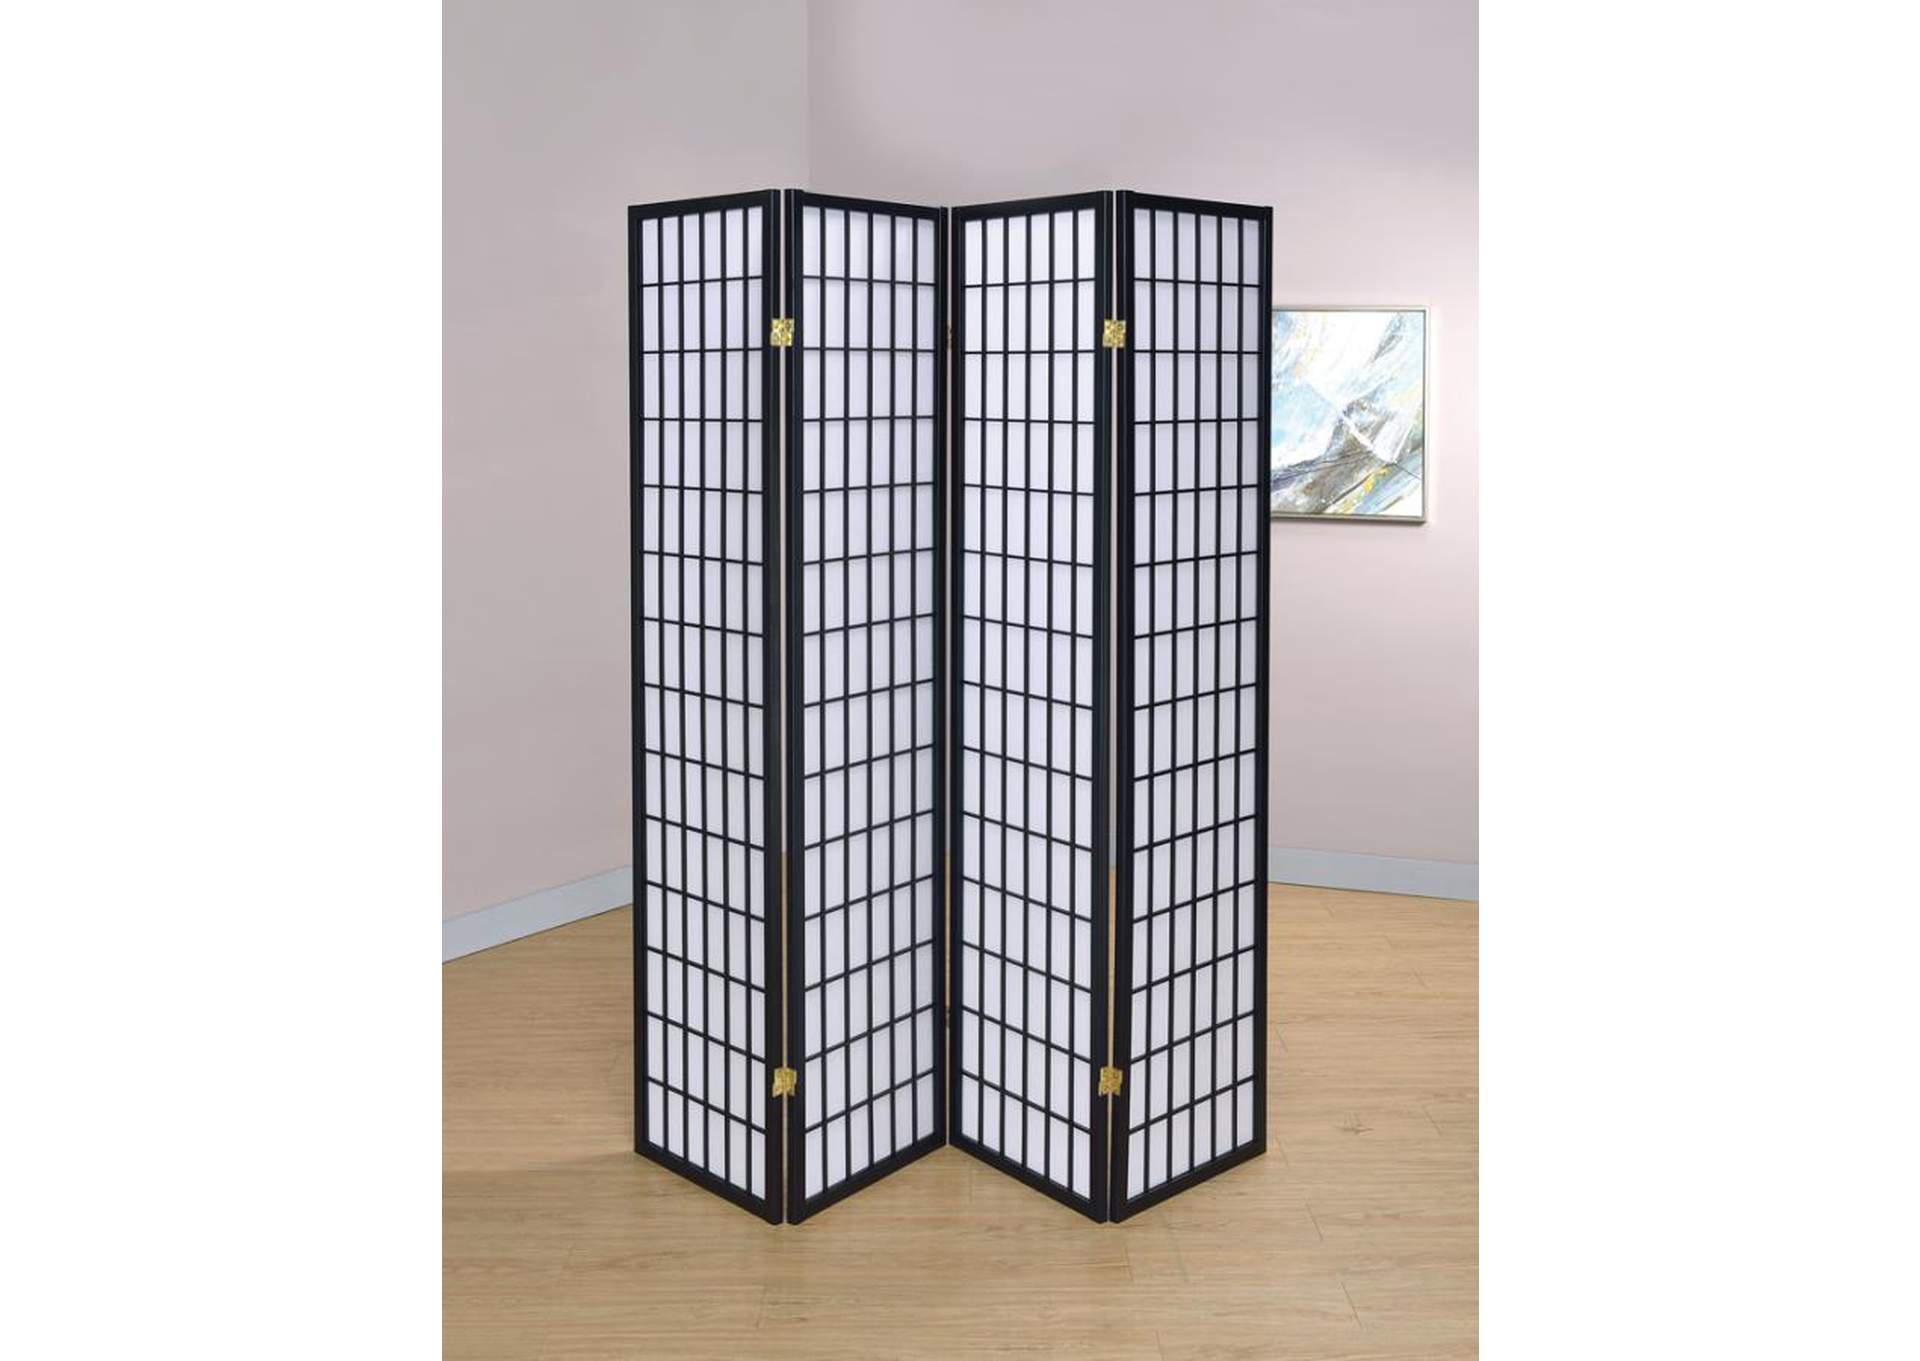 Roberto 4-Panel Folding Screen Black And White,Coaster Furniture